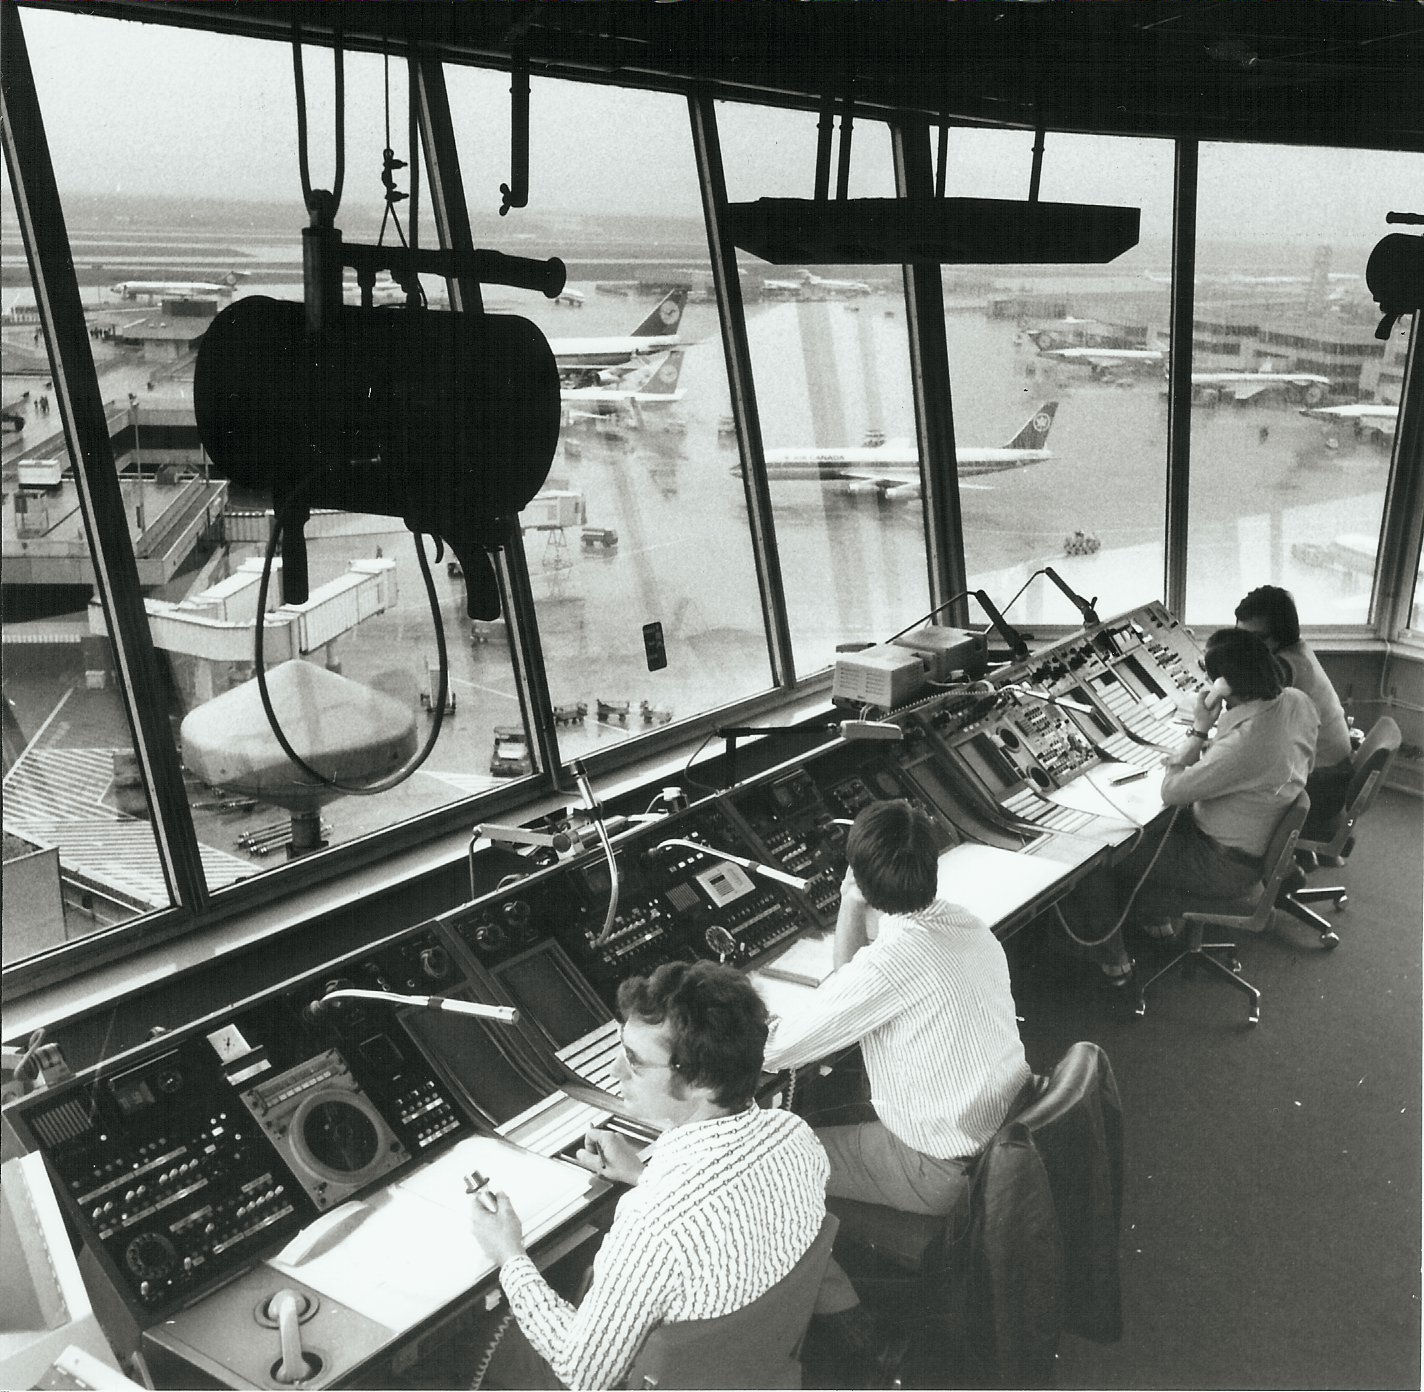 Tower Flughafen Frankfurt, 1972